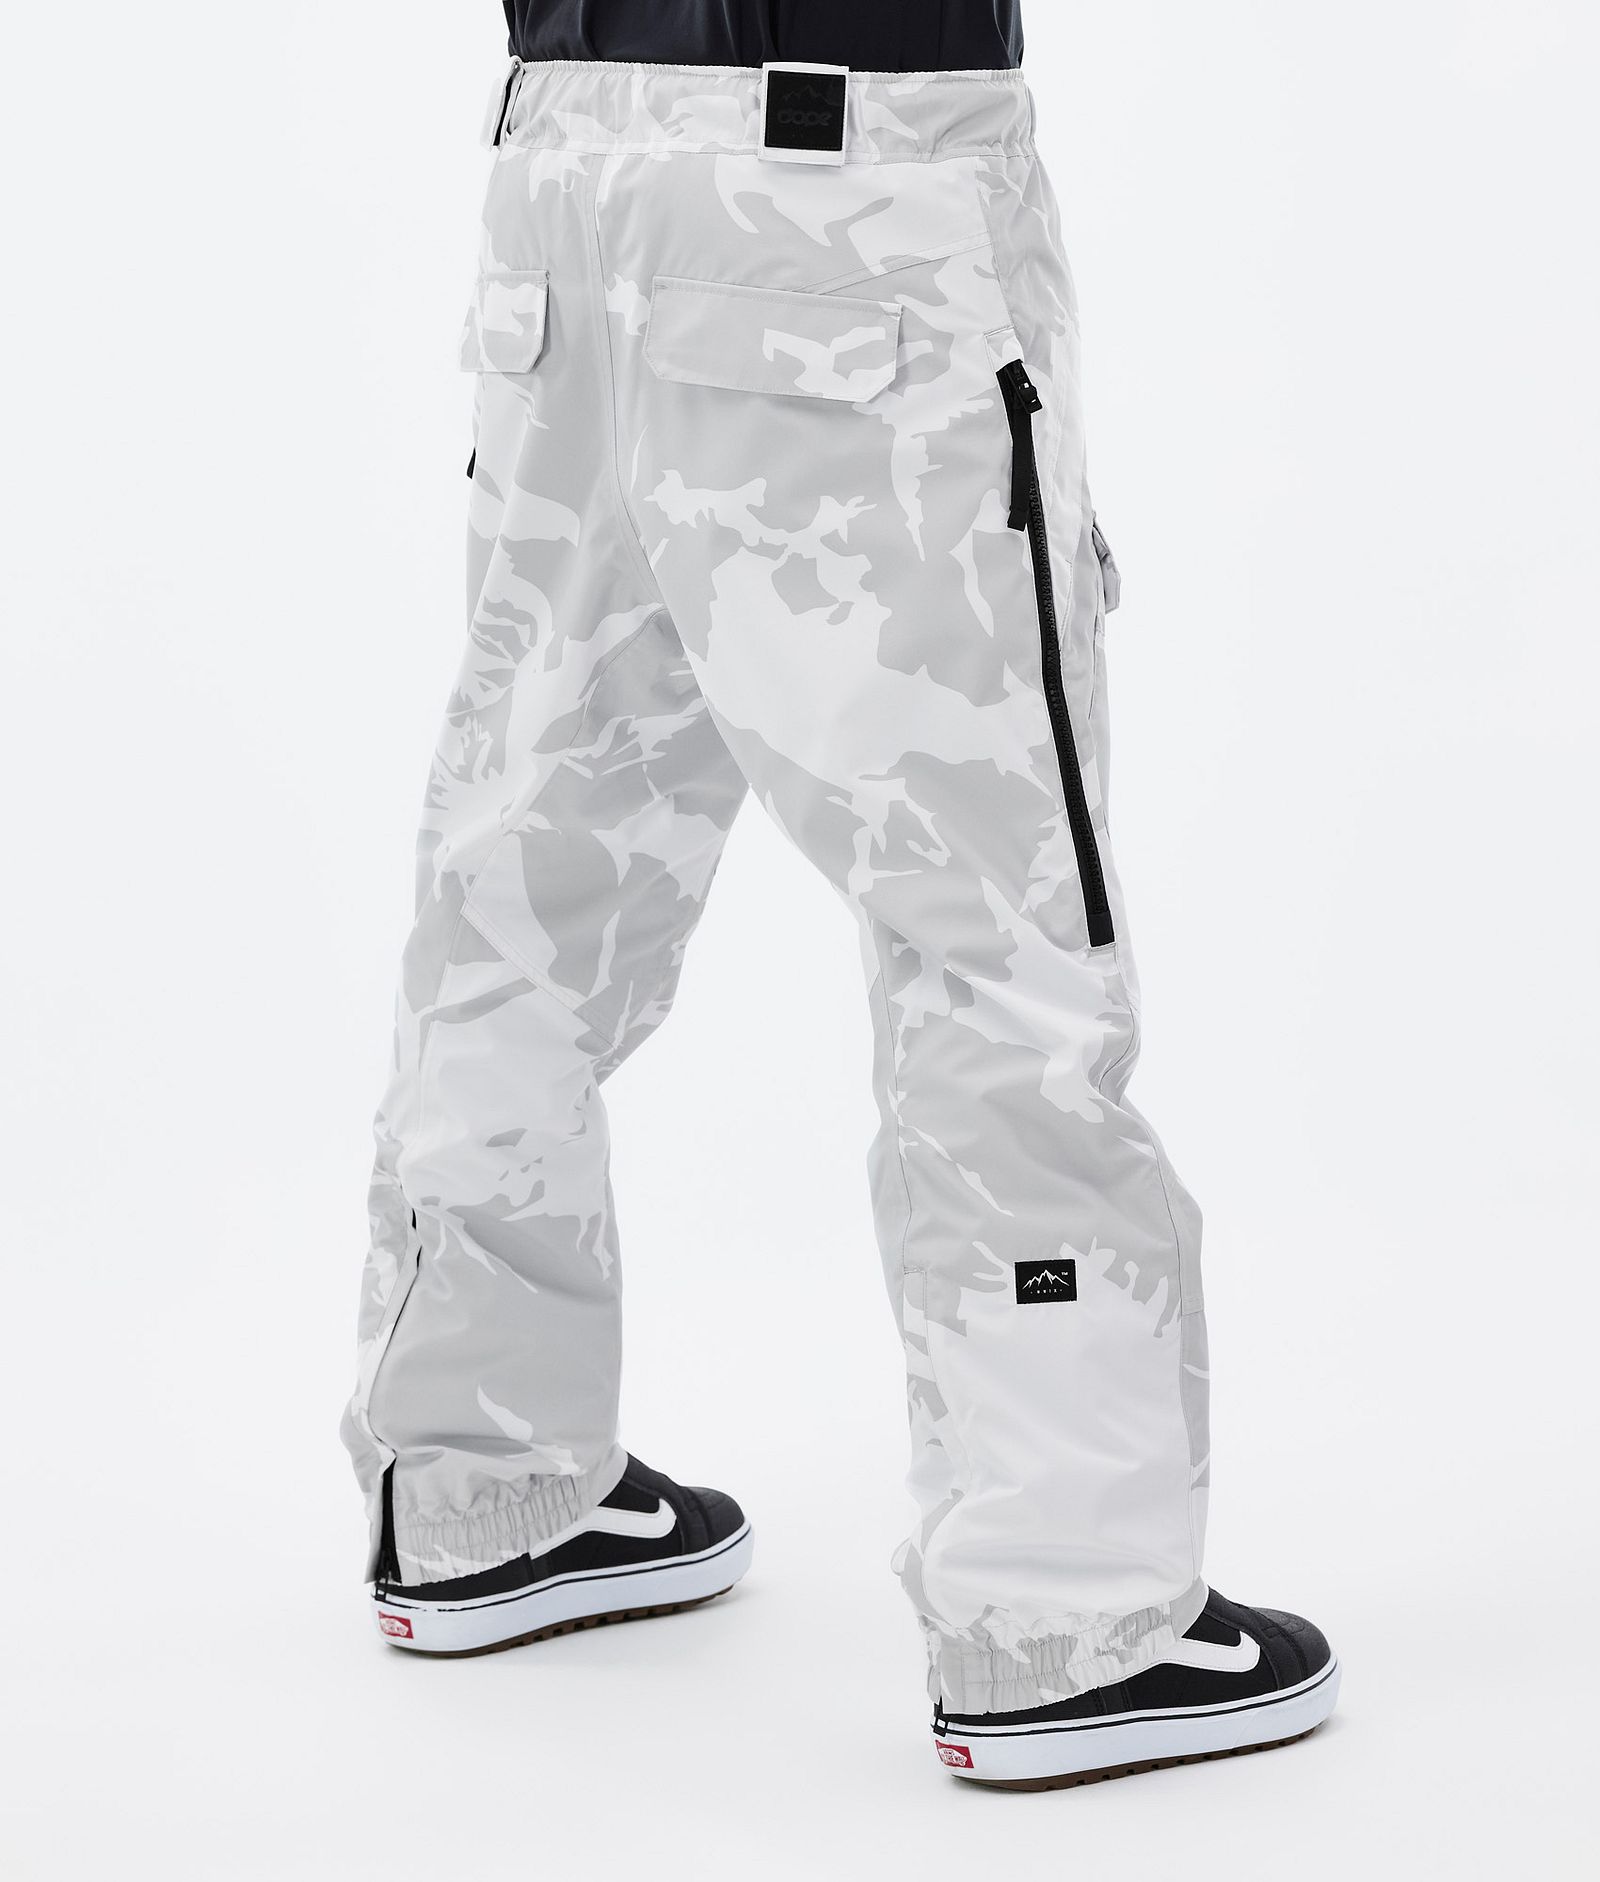 Dope Antek 2020 Pantaloni Snowboard Uomo Tucks Camo - Bianco